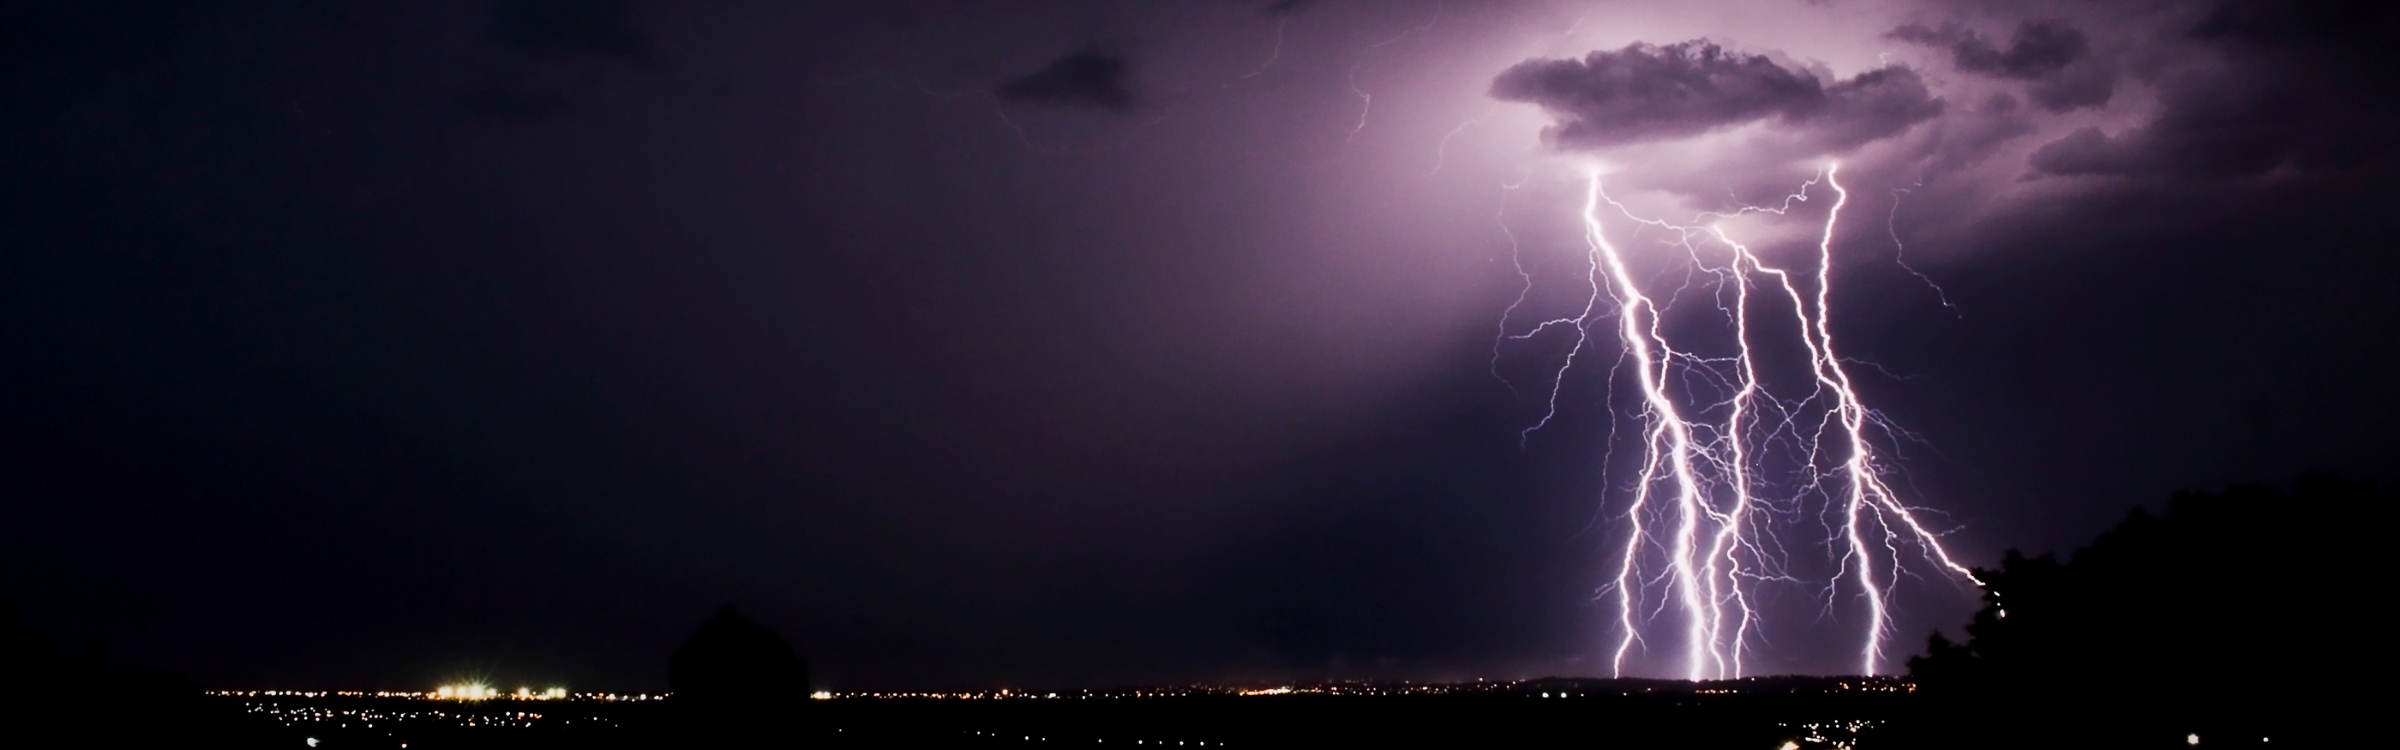 lightning during sever weather